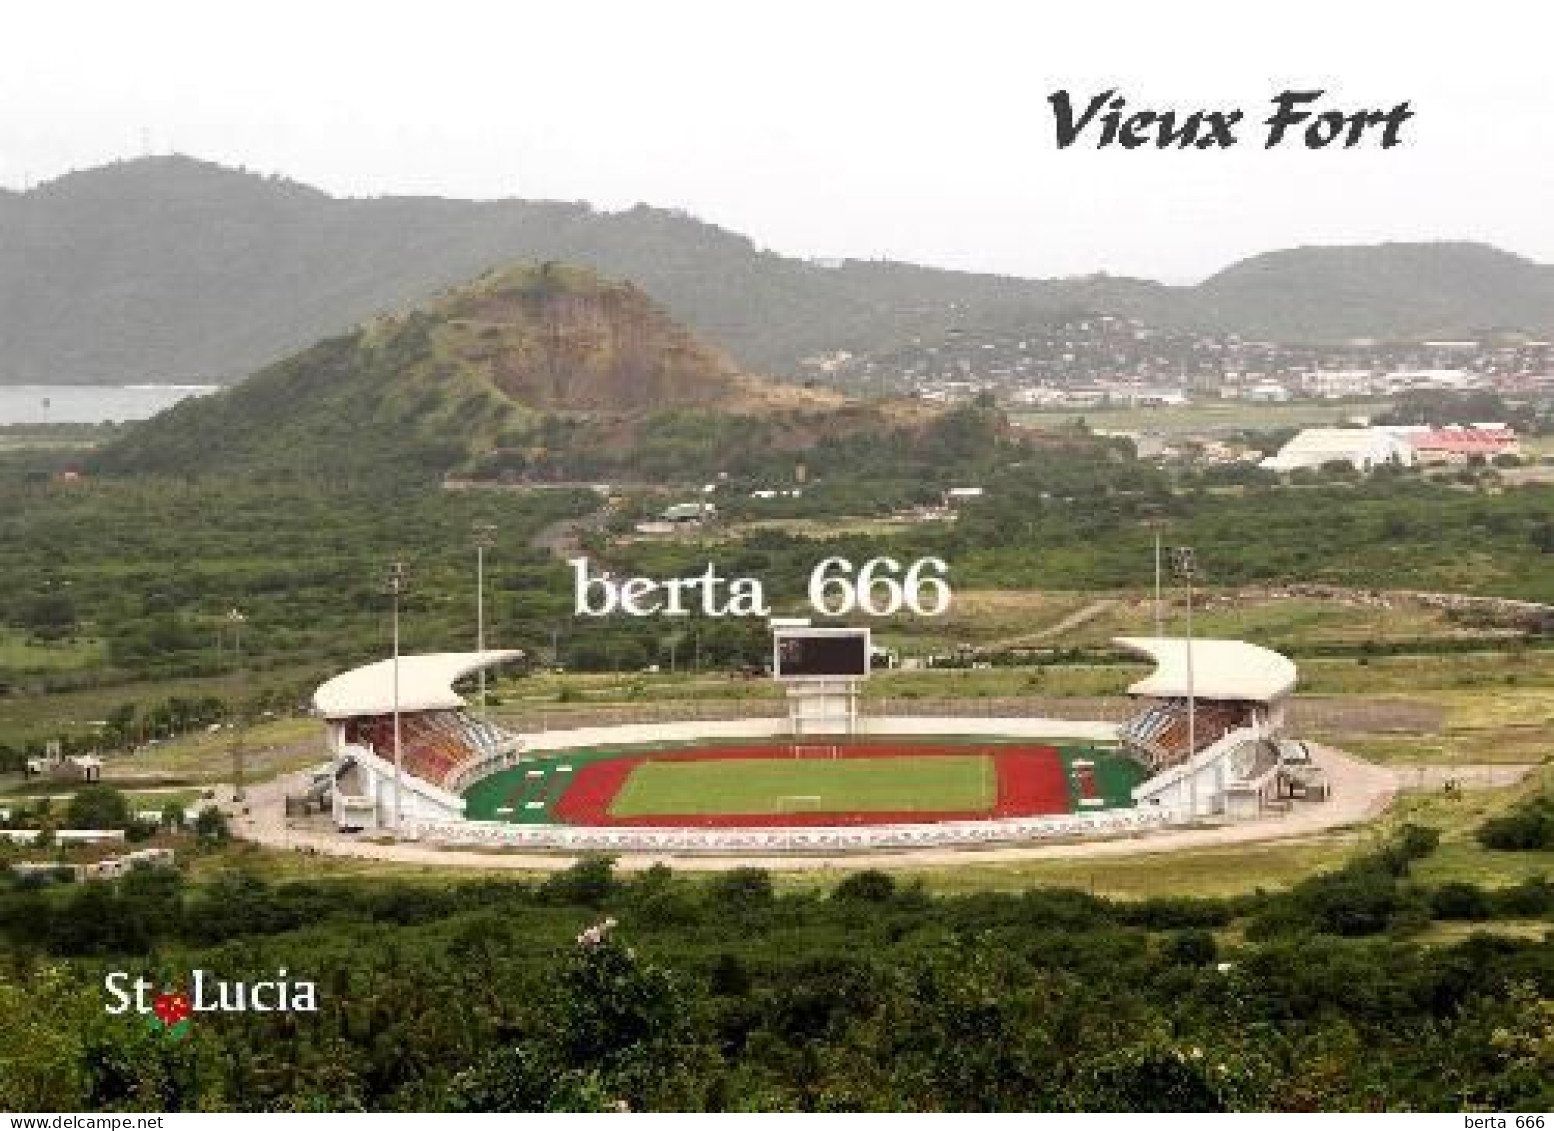 Saint Lucia Island Vieux Fort Stadium New Postcard - St. Lucia